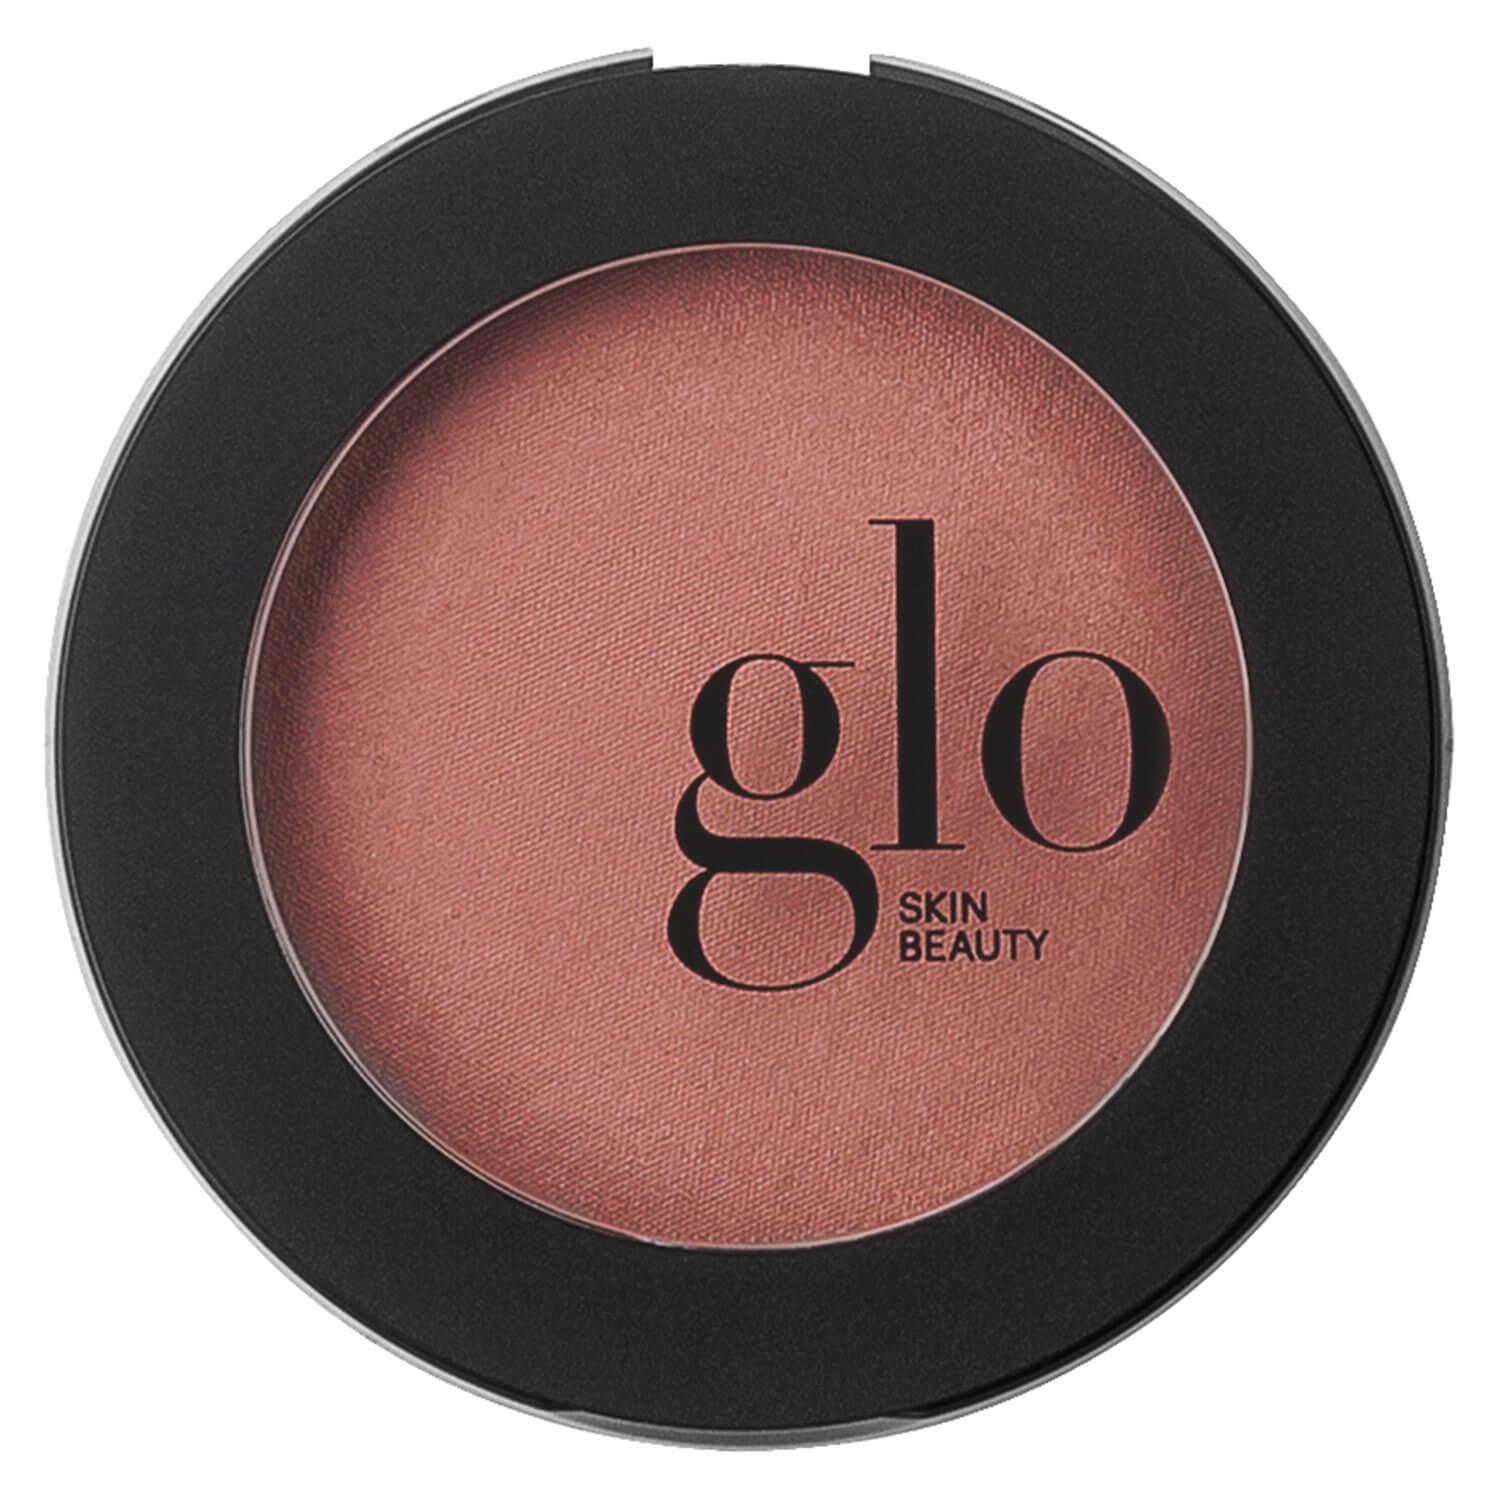 Glo Skin Beauty Blush - Blush Spice Berry